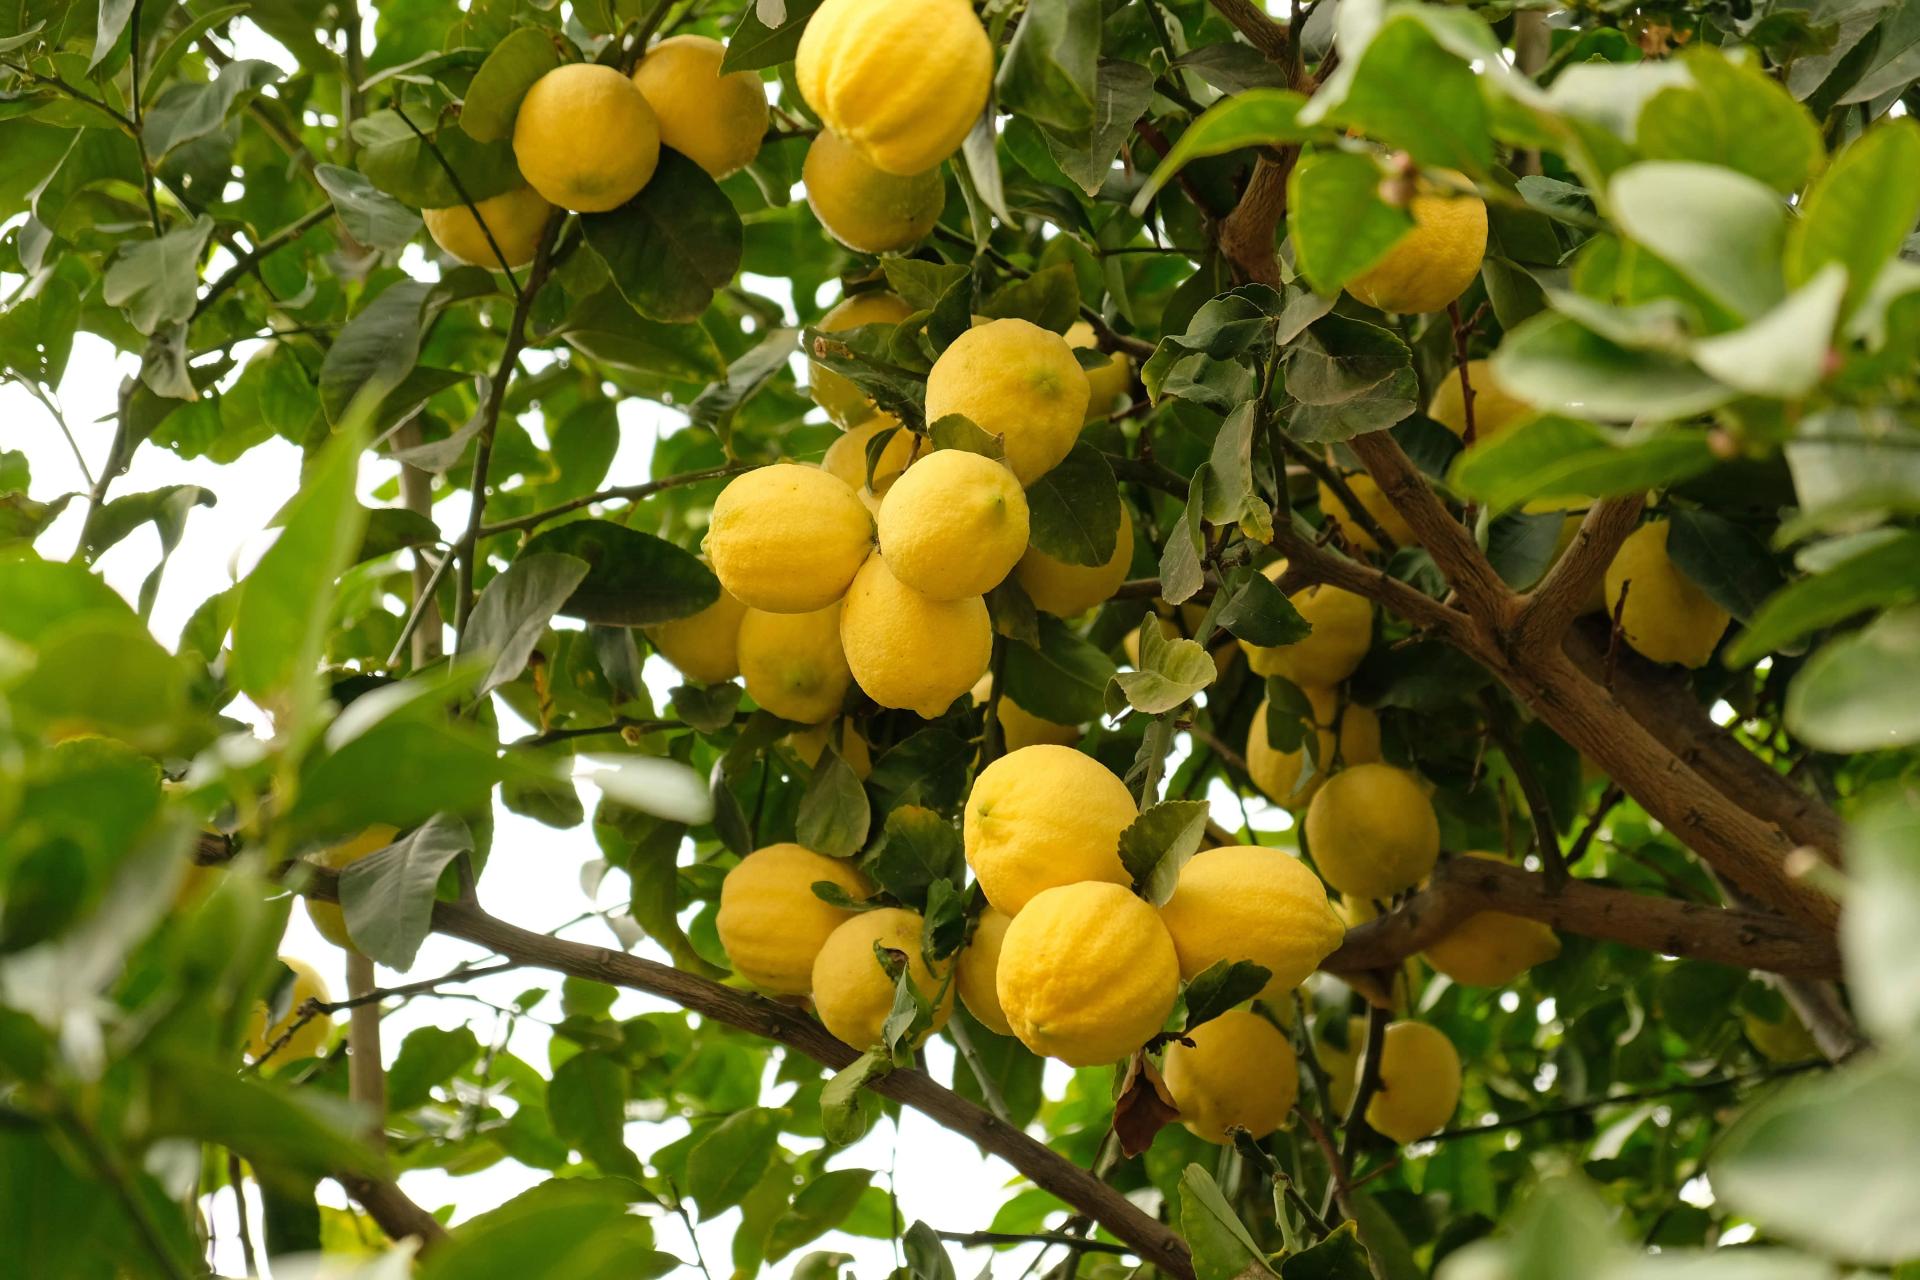 Lemon Tree Branch